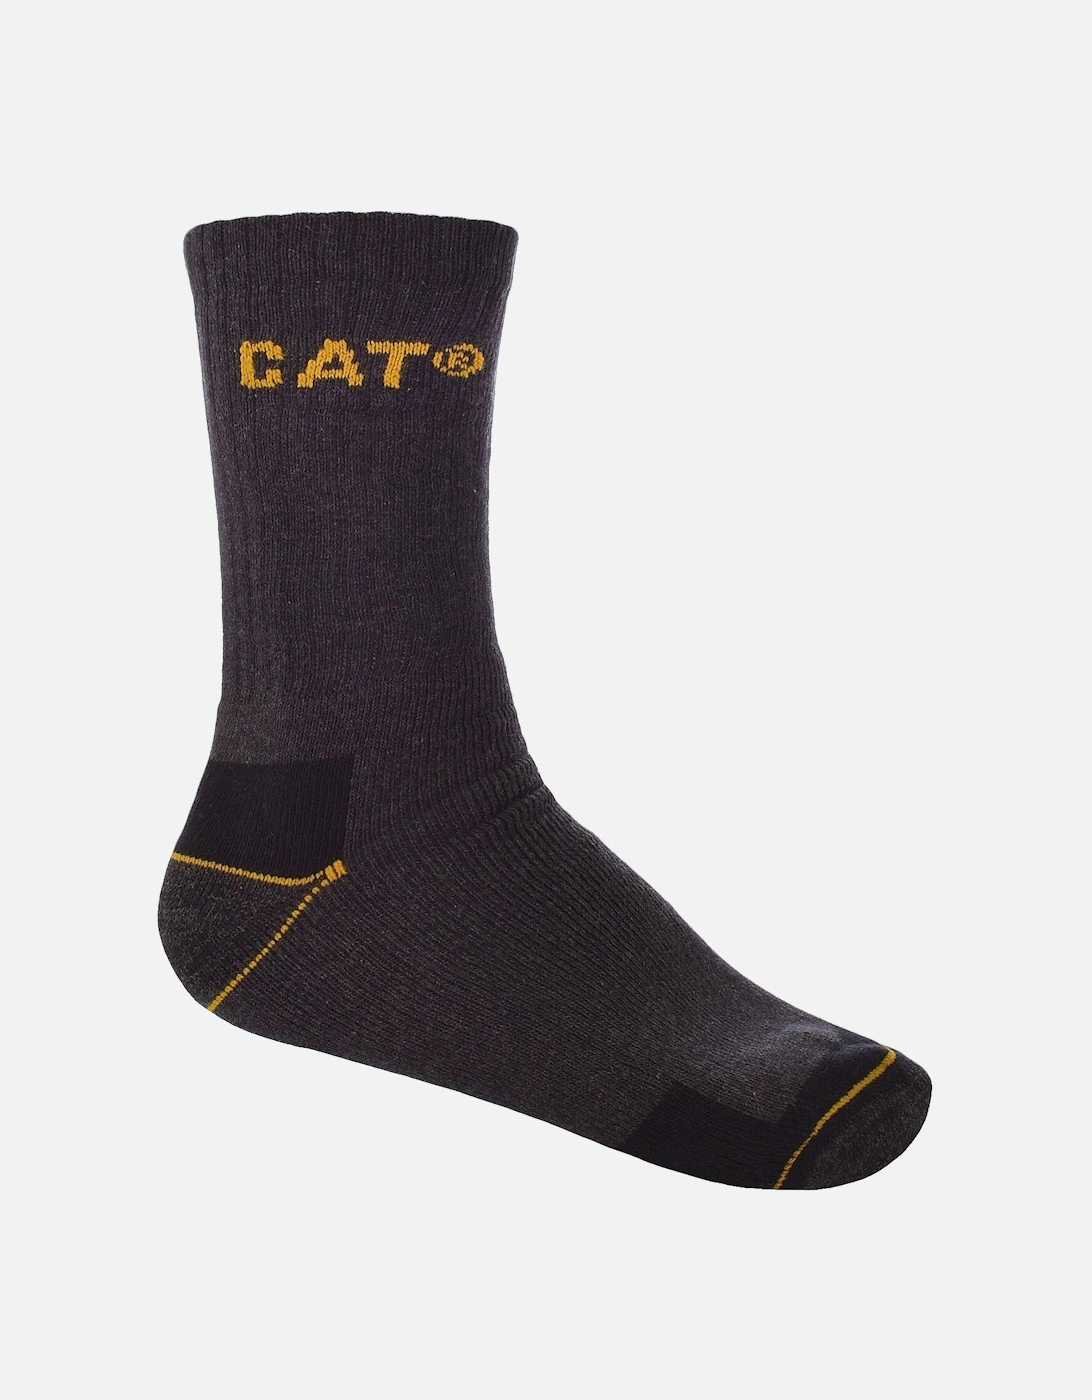 CAT Mens Heavy Duty Socks - Charcoal